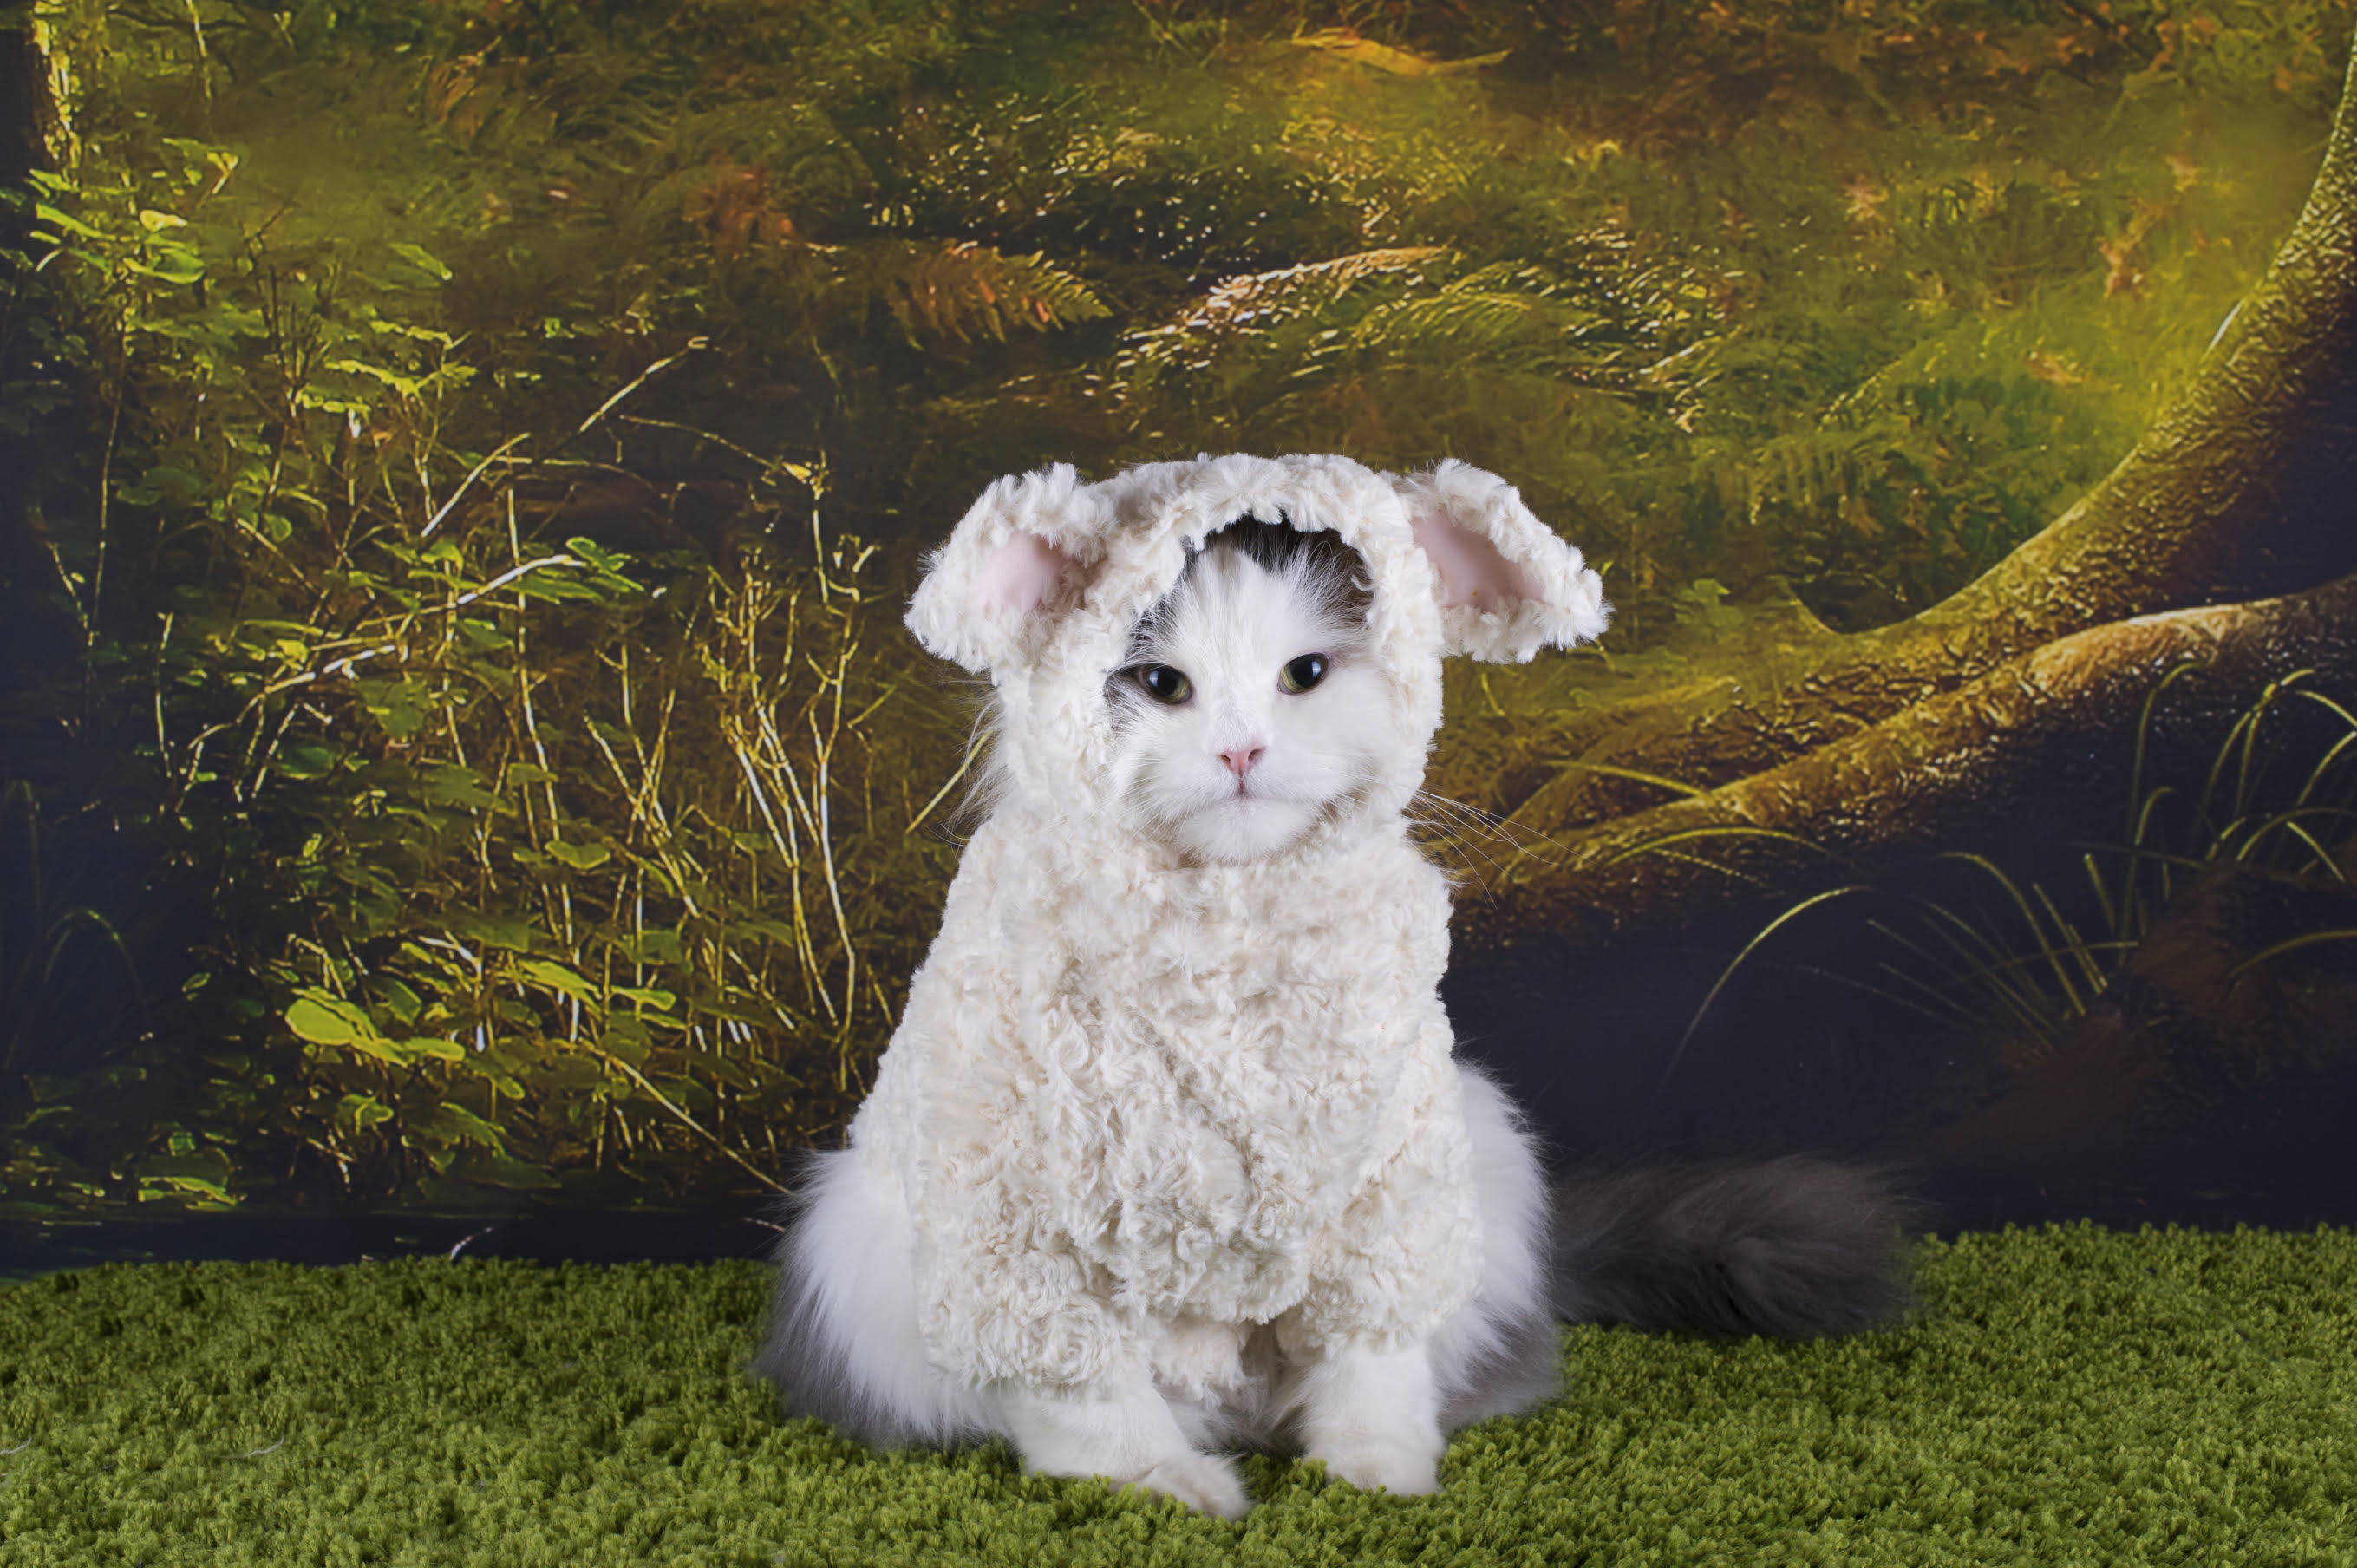 weird stock photos - cat in lamb costume